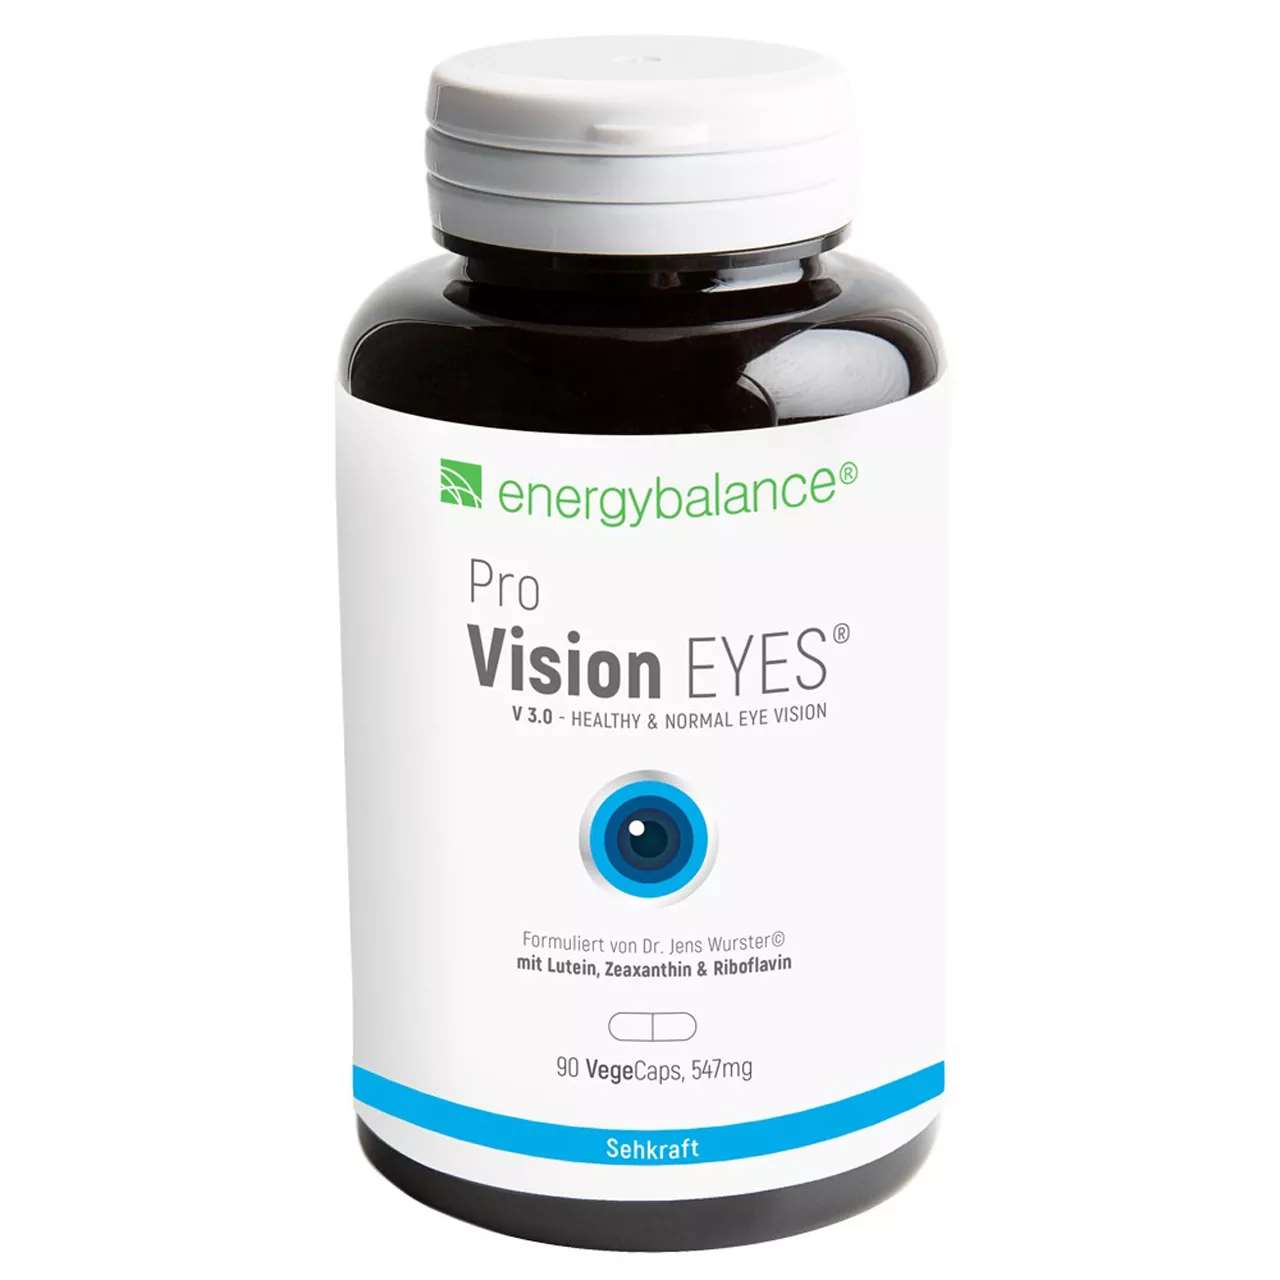 Pro Vision Eyes von Energybalance